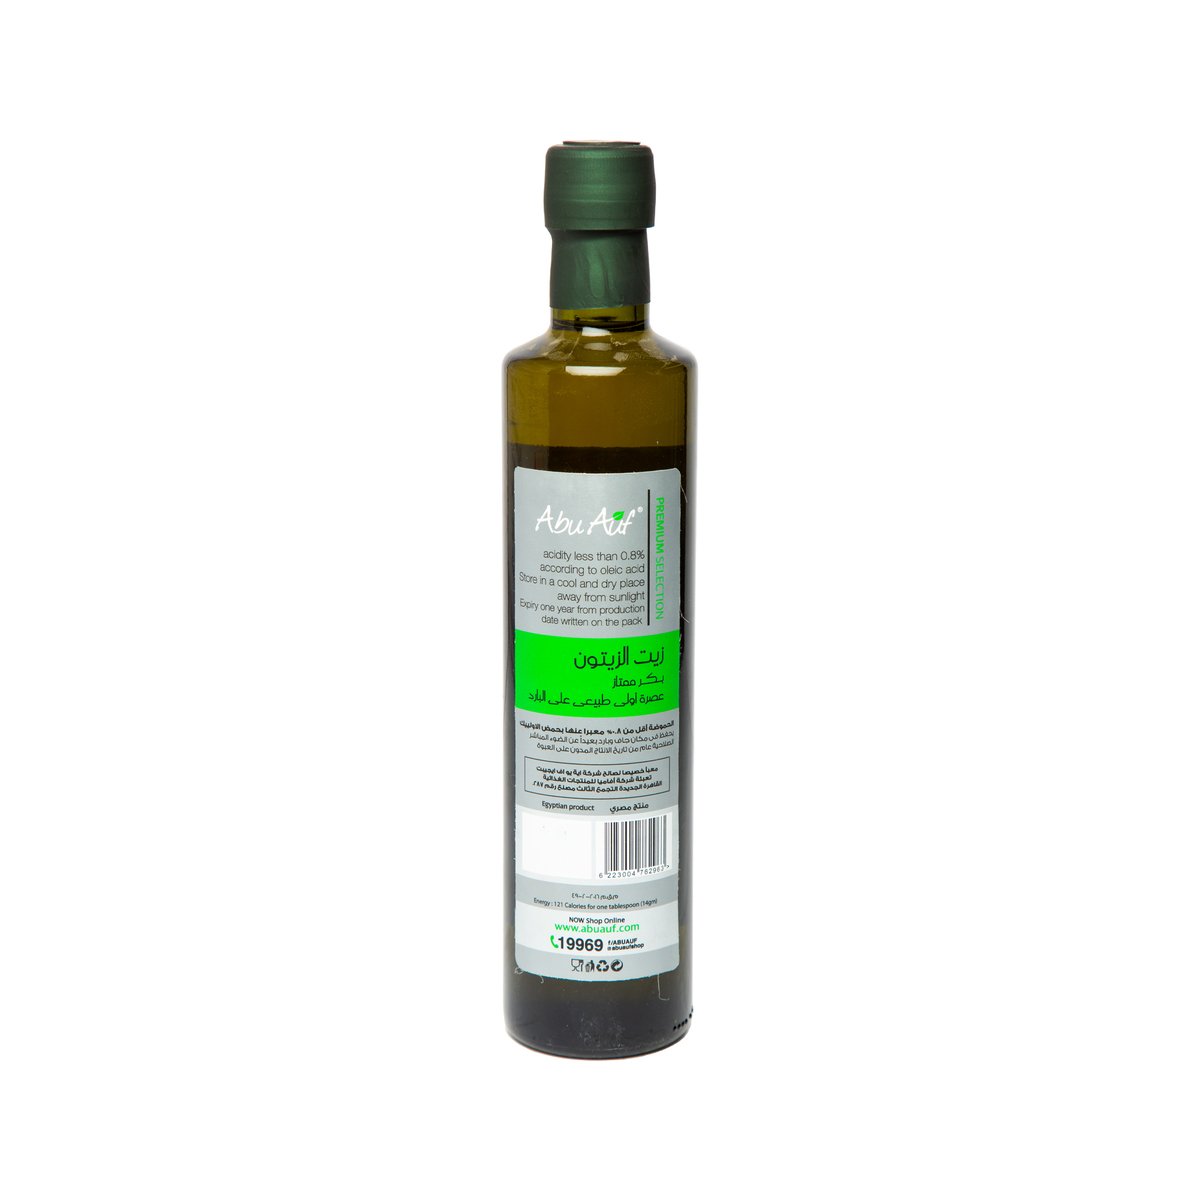 Abu Auf Extra Virgin Olive Oil 500 ml